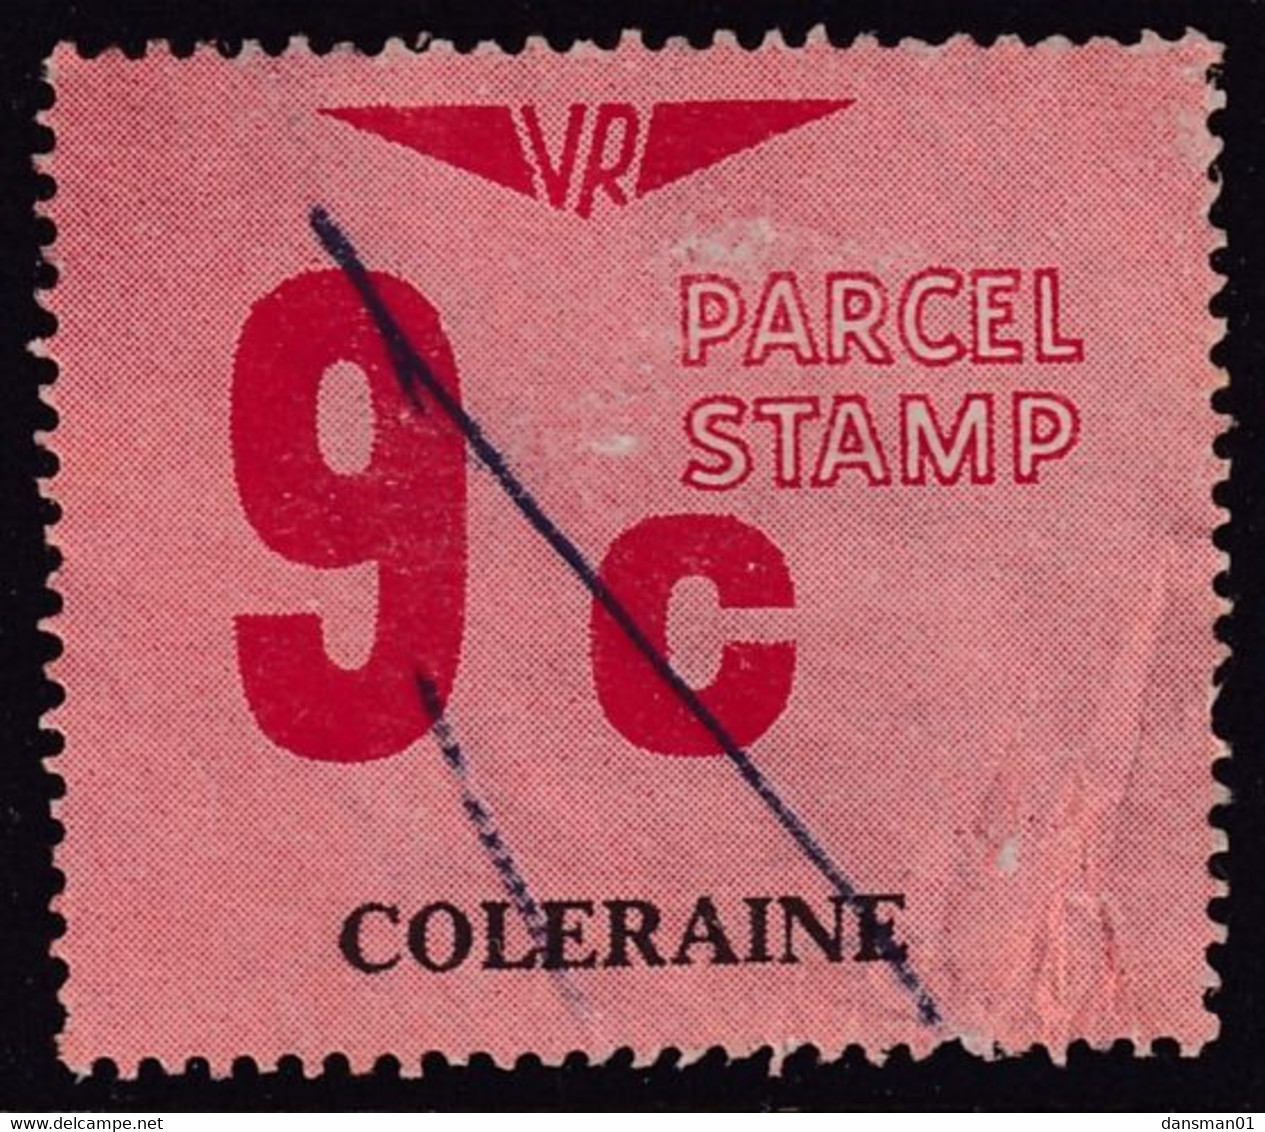 Victoria 1966 Railway Parcel Stamp 9c COLERAINE Used - Variedades Y Curiosidades